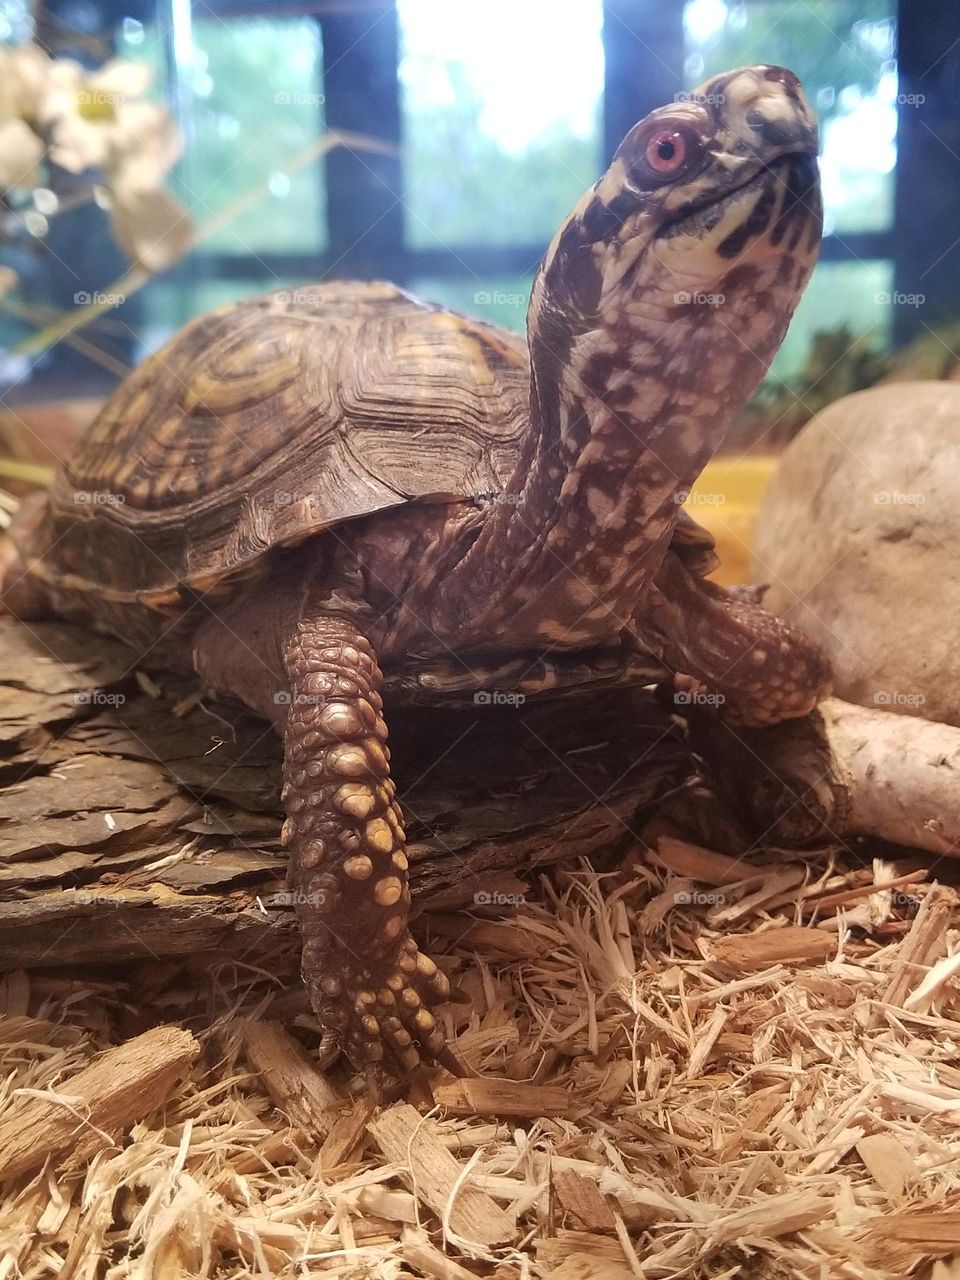 Turtle time. Cowabunga!